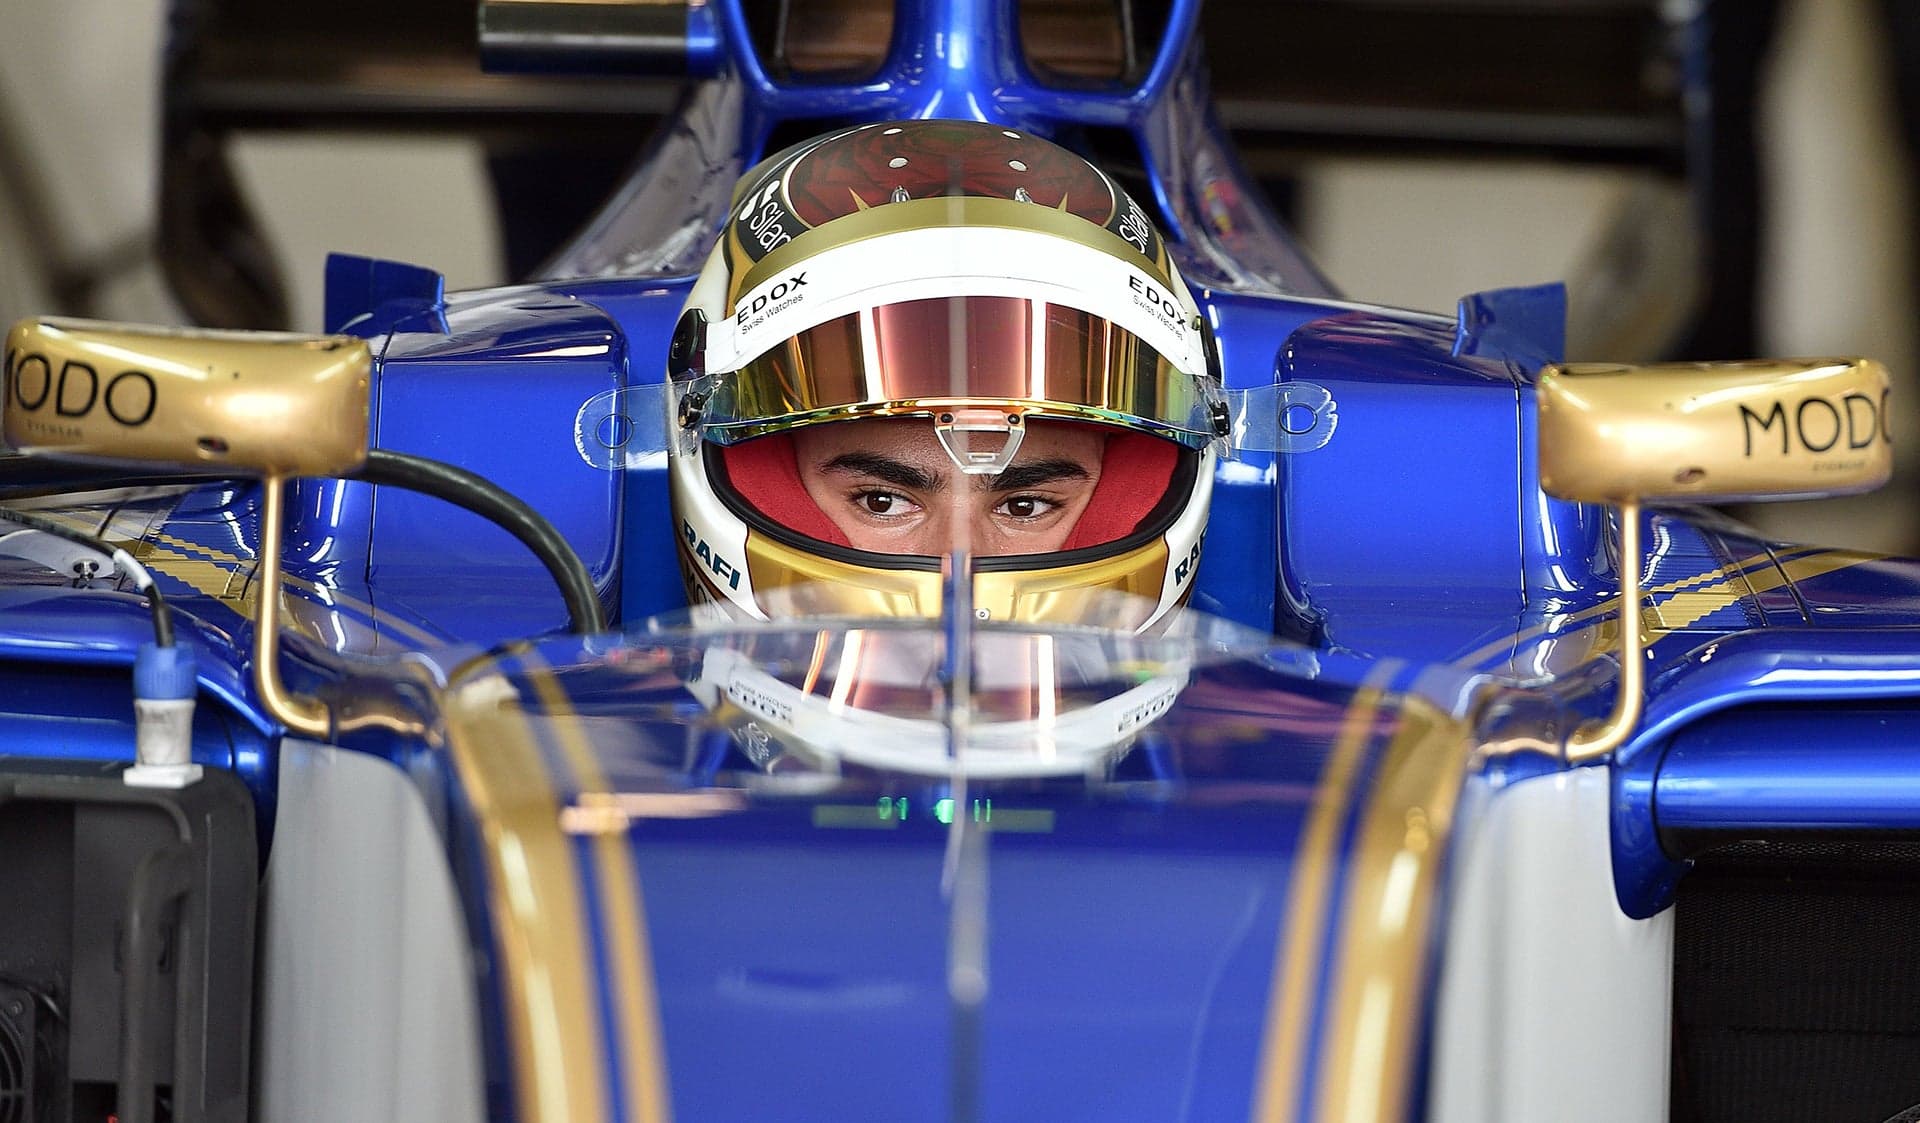 Pascal Wehrlein Will Drive In Bahrain Grand Prix